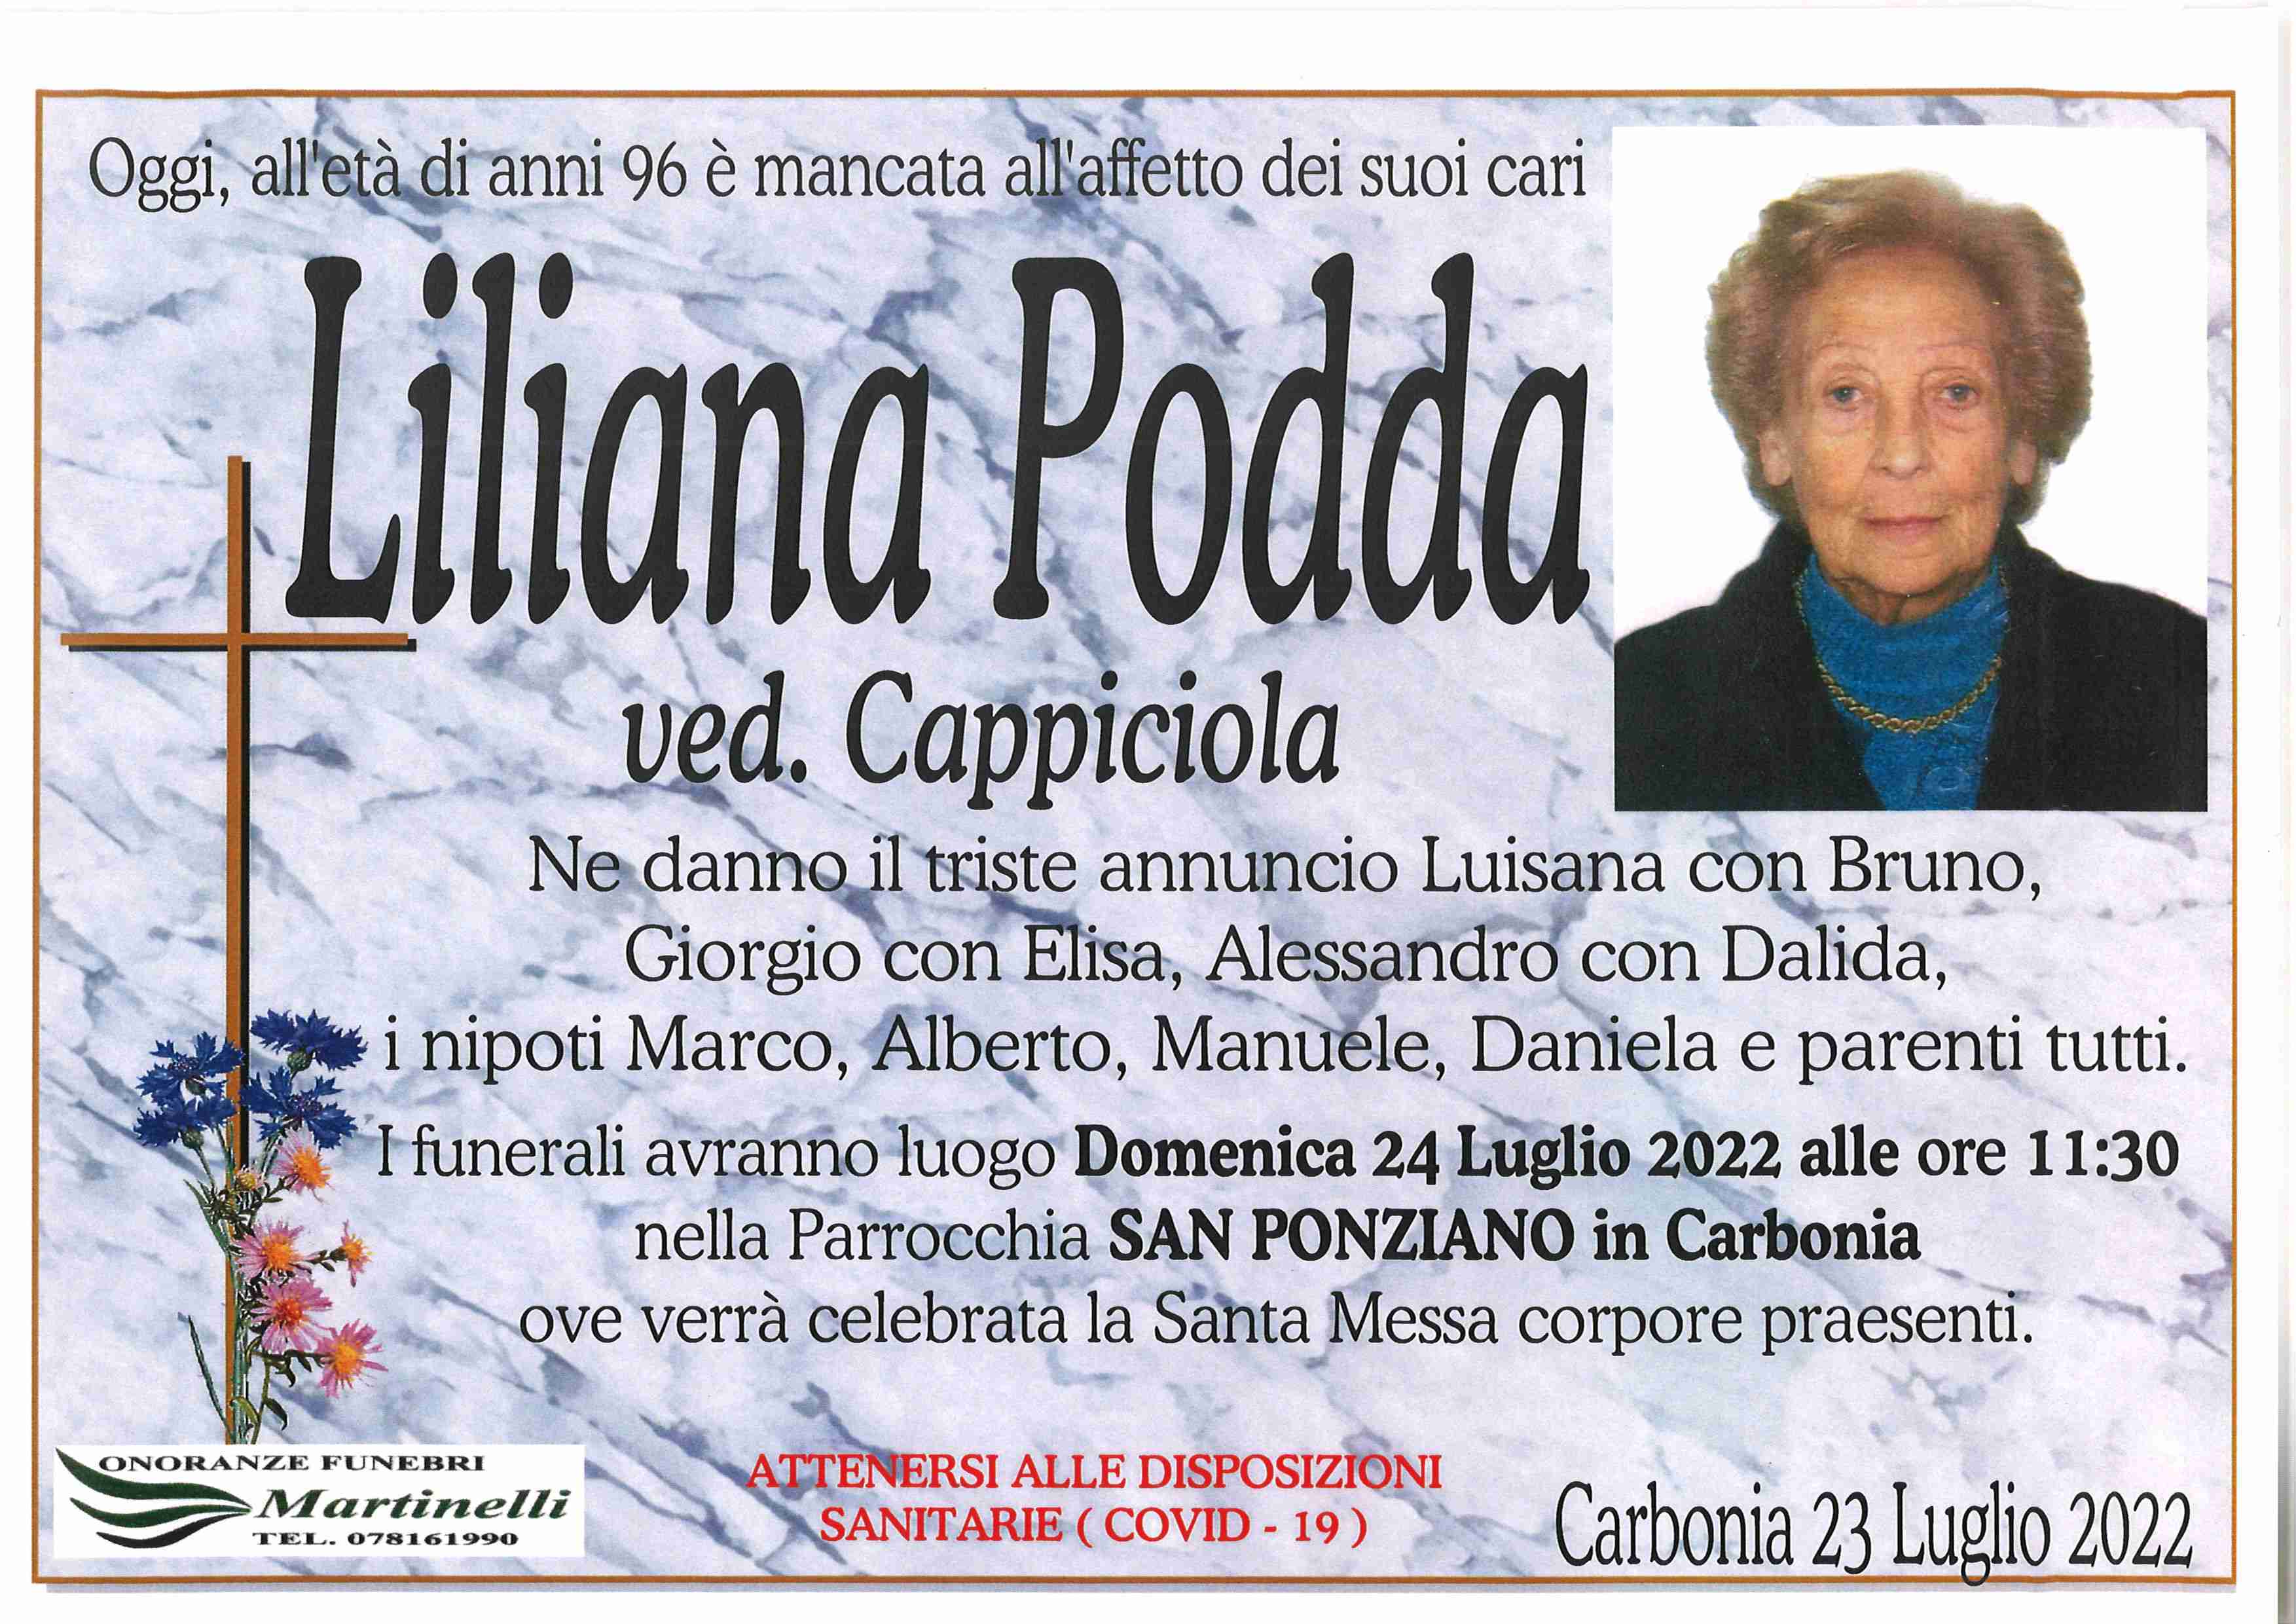 Liliana Podda